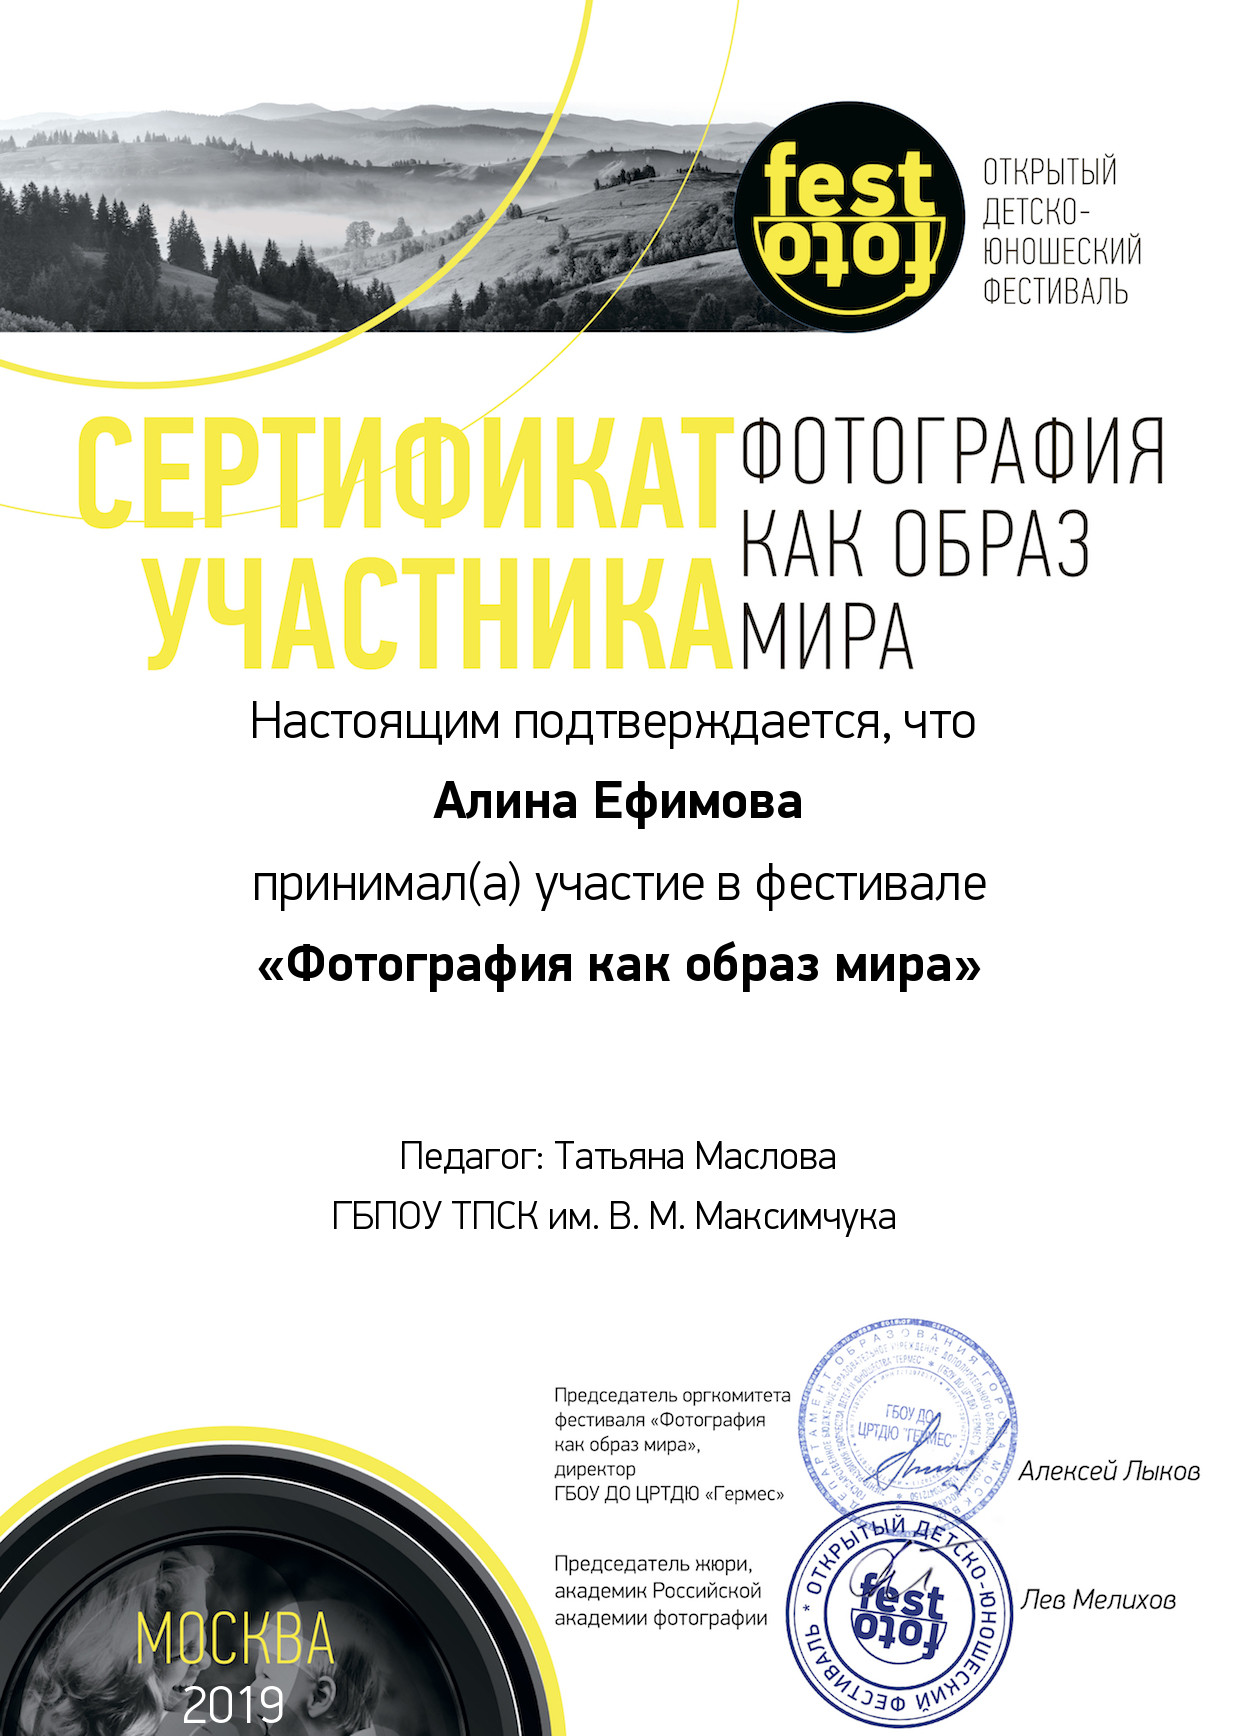 Сертификат участника FestFoto.ru (2019) - Алина Ефимова